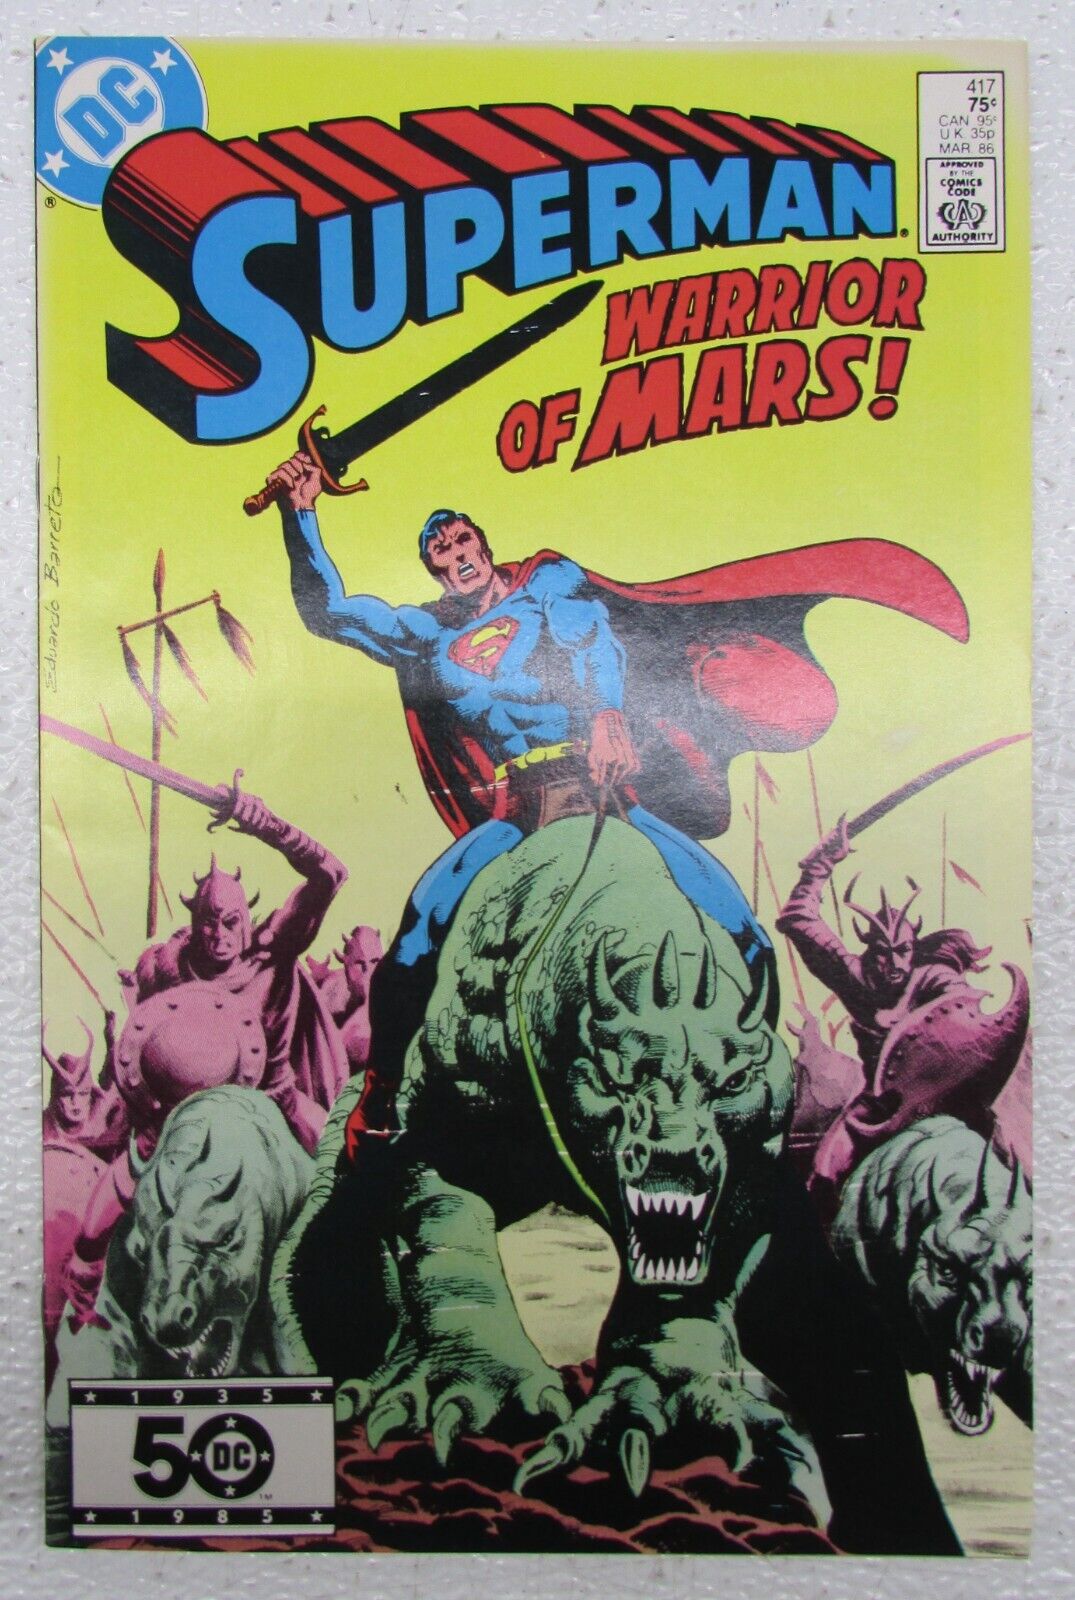 DC COMIC BOOK SUPERMAN WARRIOR OF MARS #417 MAR 1986